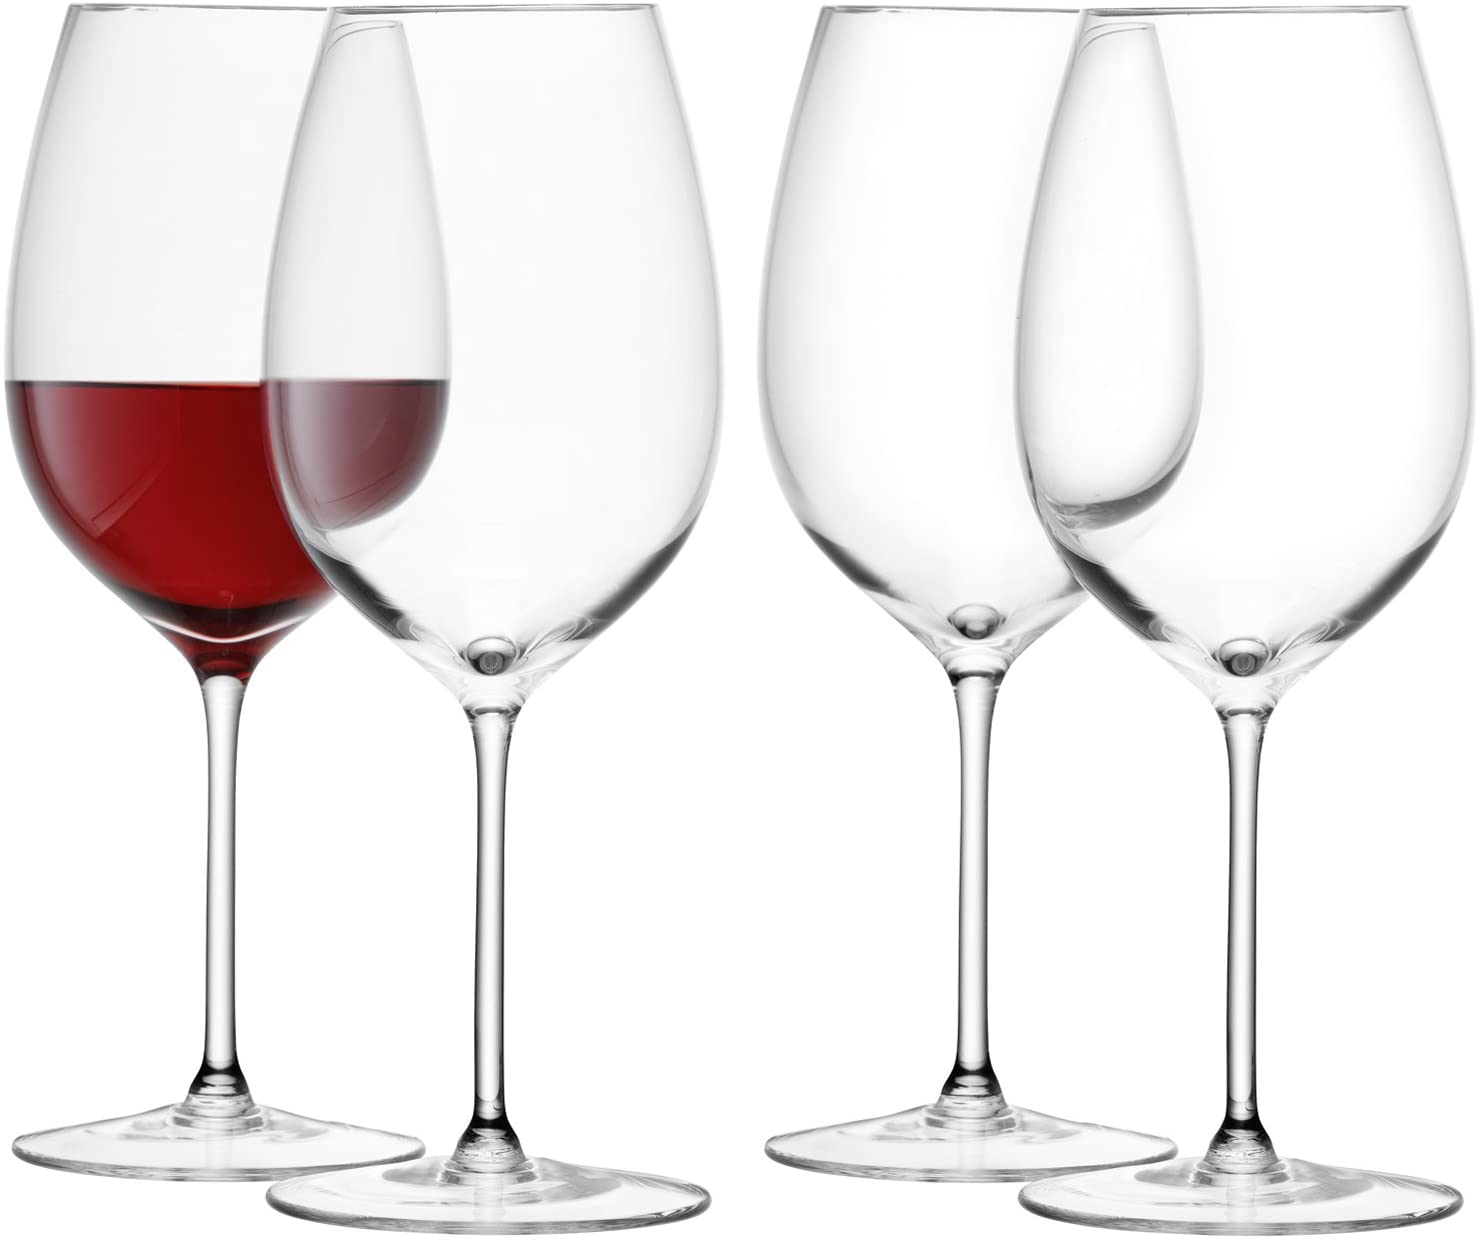 LSA International 420 ml Red Wine Goblet, Transparent (Pack of 4)